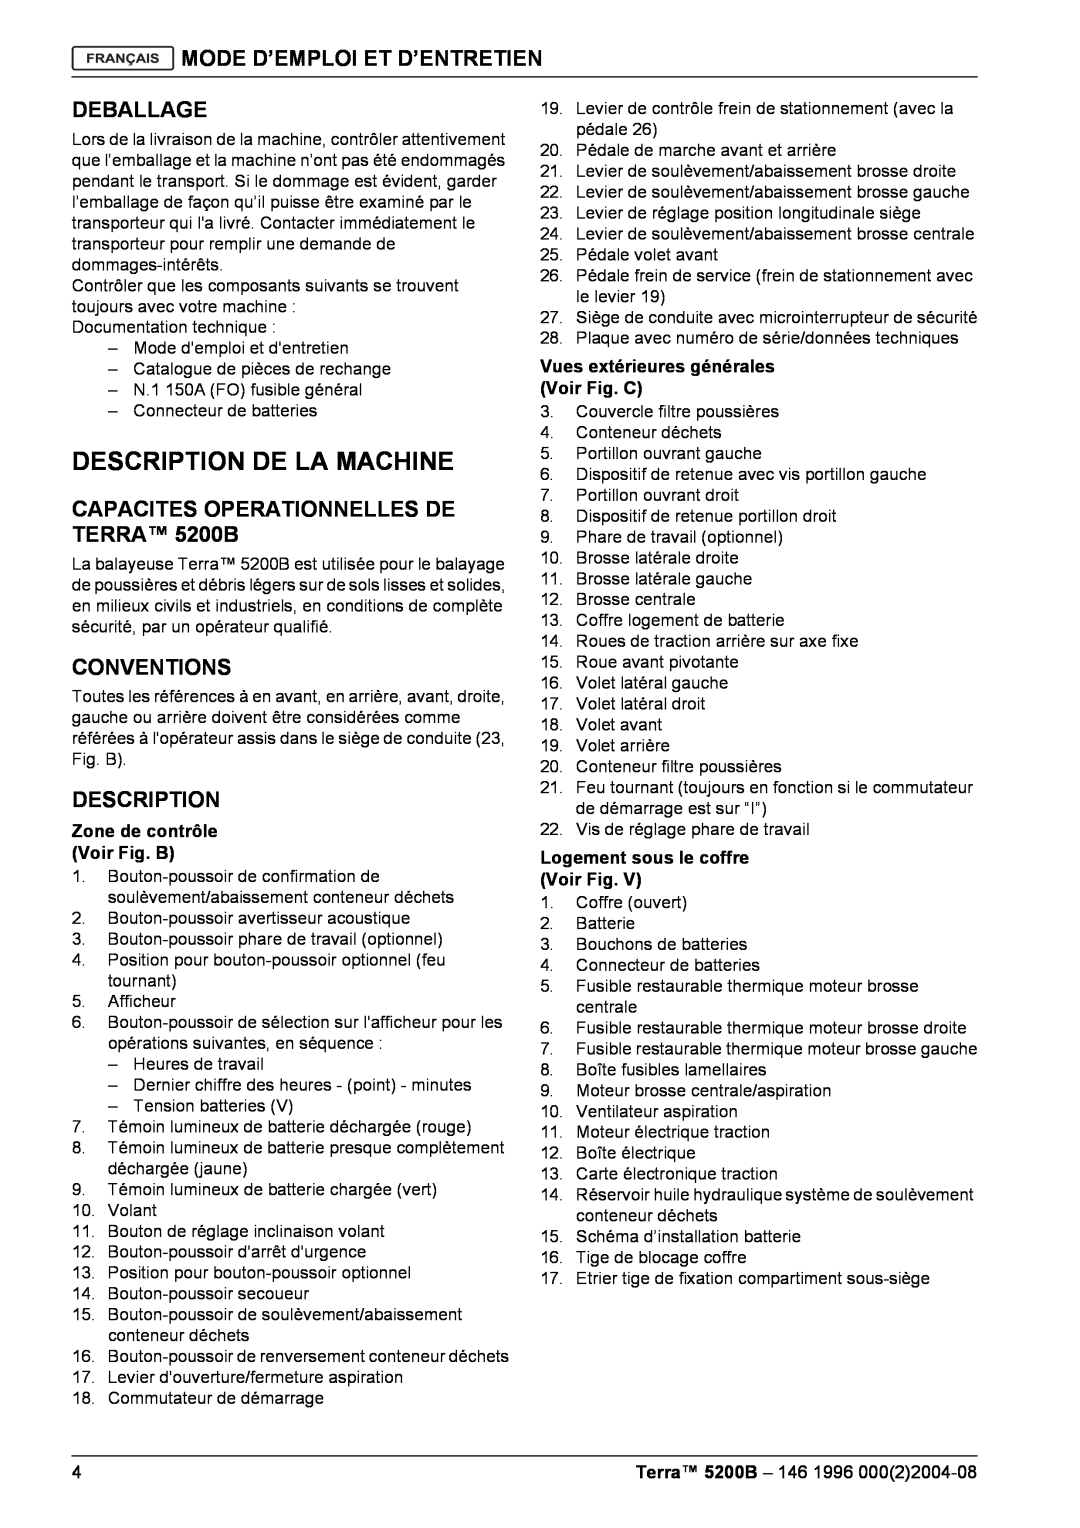 Nilfisk-Advance America Description De La Machine, Deballage, CAPACITES OPERATIONNELLES DE TERRA 5200B, Conventions 